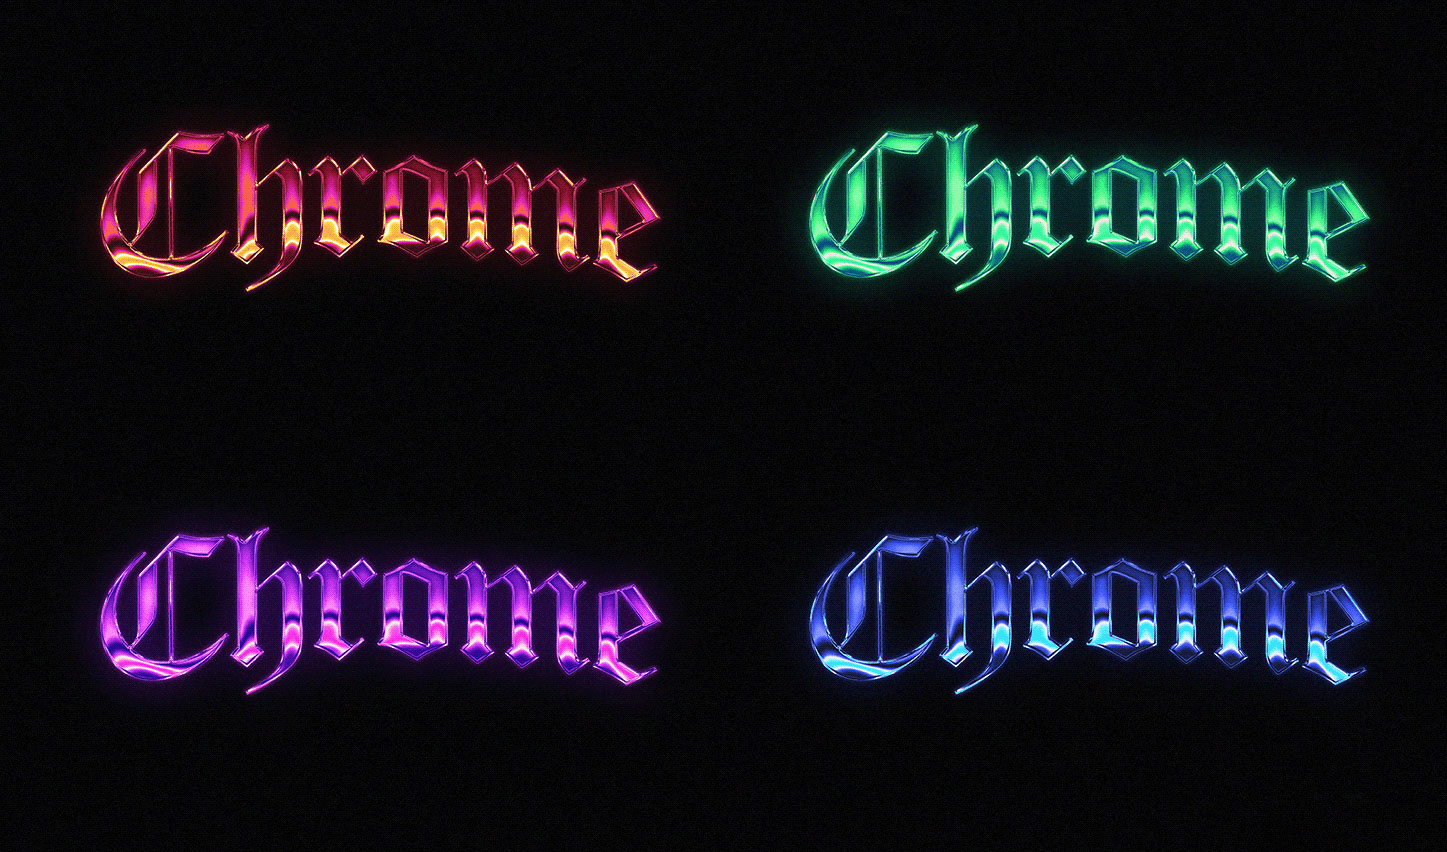 chrome gradient photoshop free download